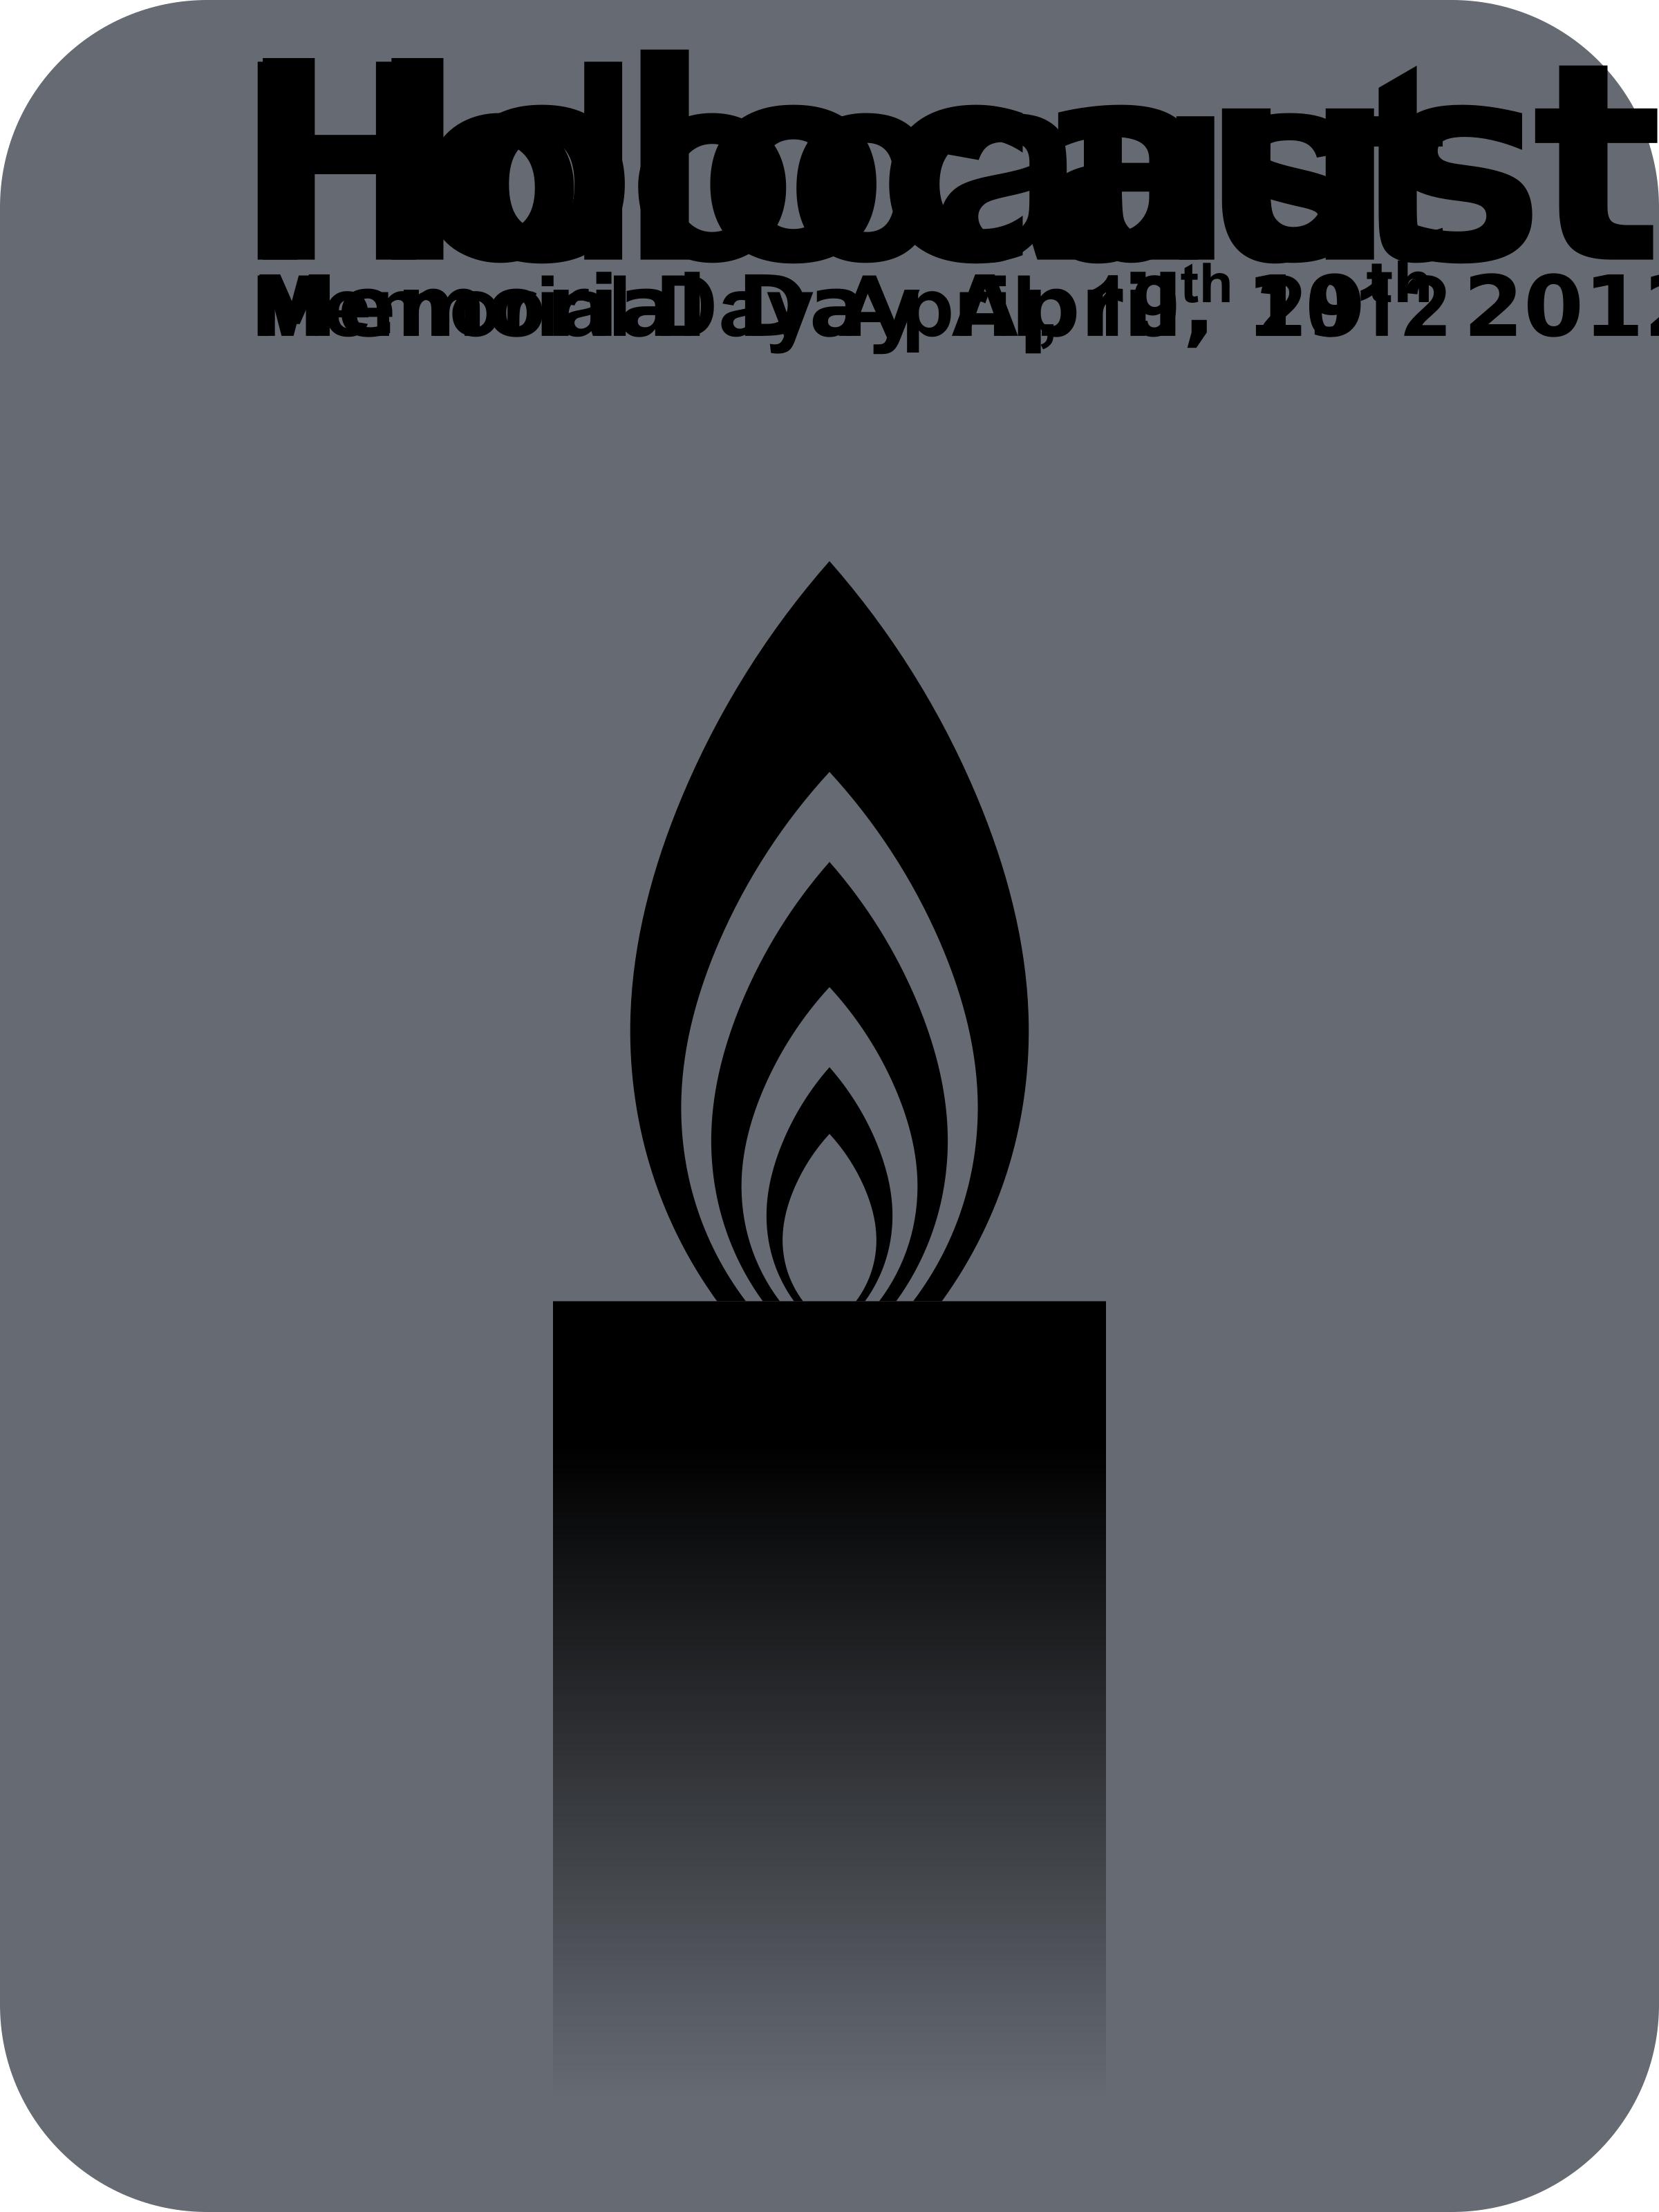 HolocaustMemorialDay 20120419 png